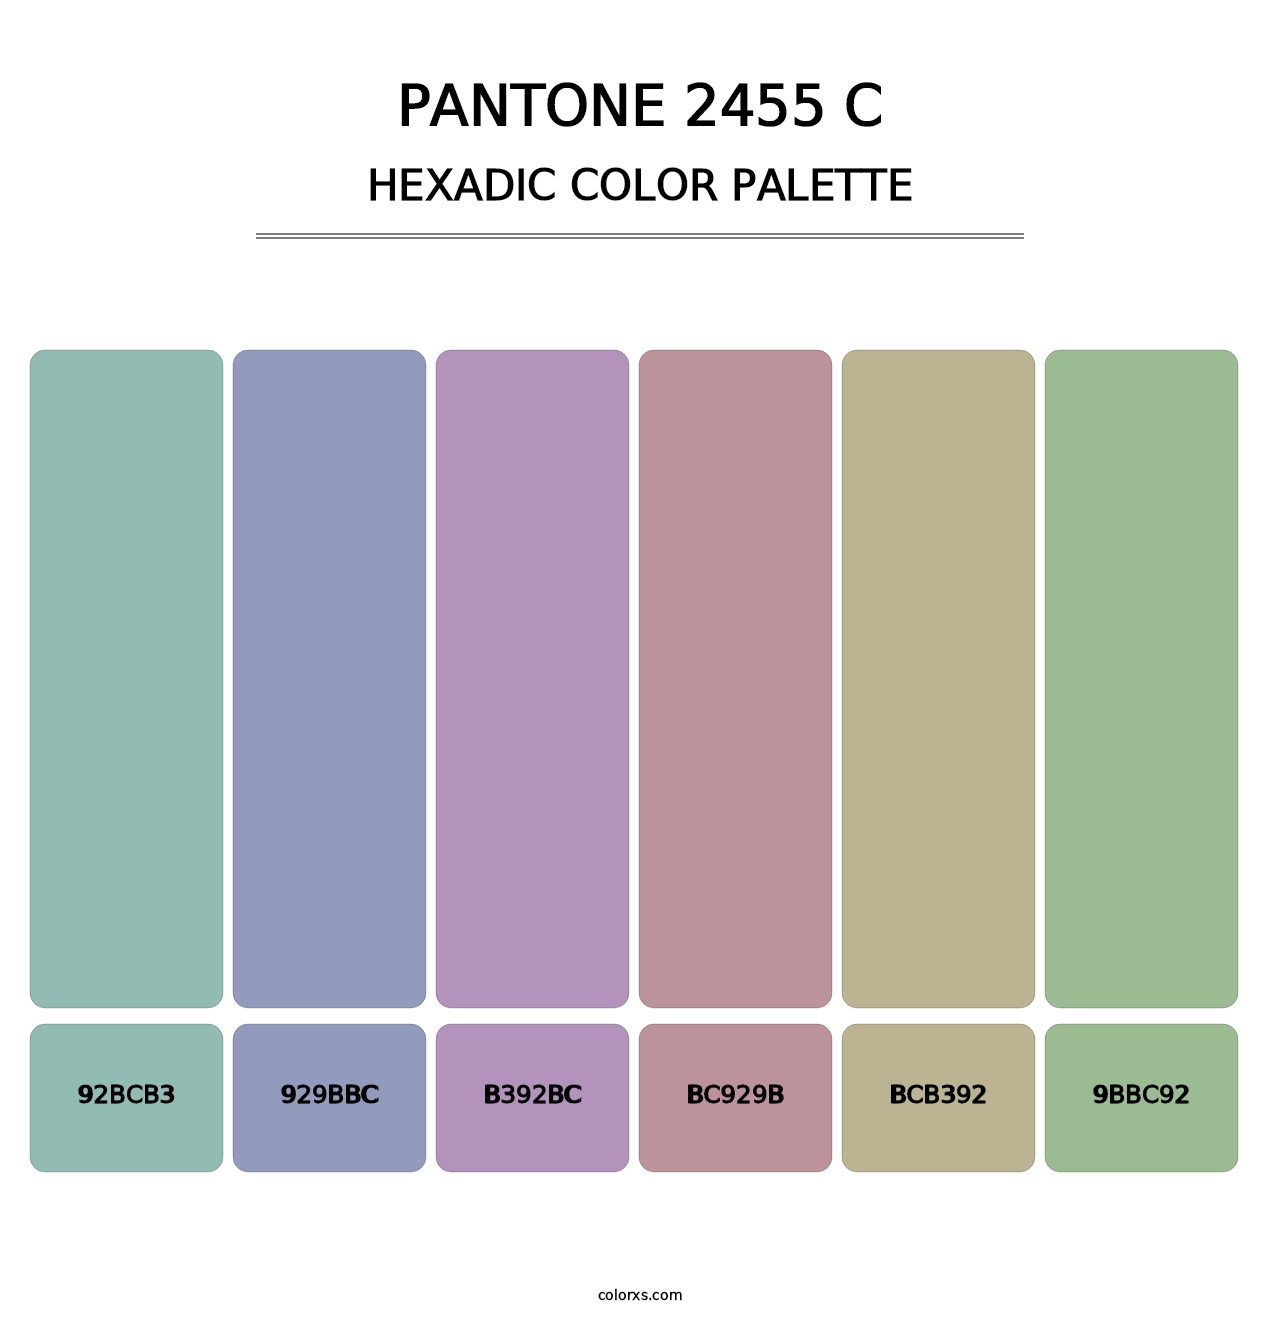 PANTONE 2455 C - Hexadic Color Palette